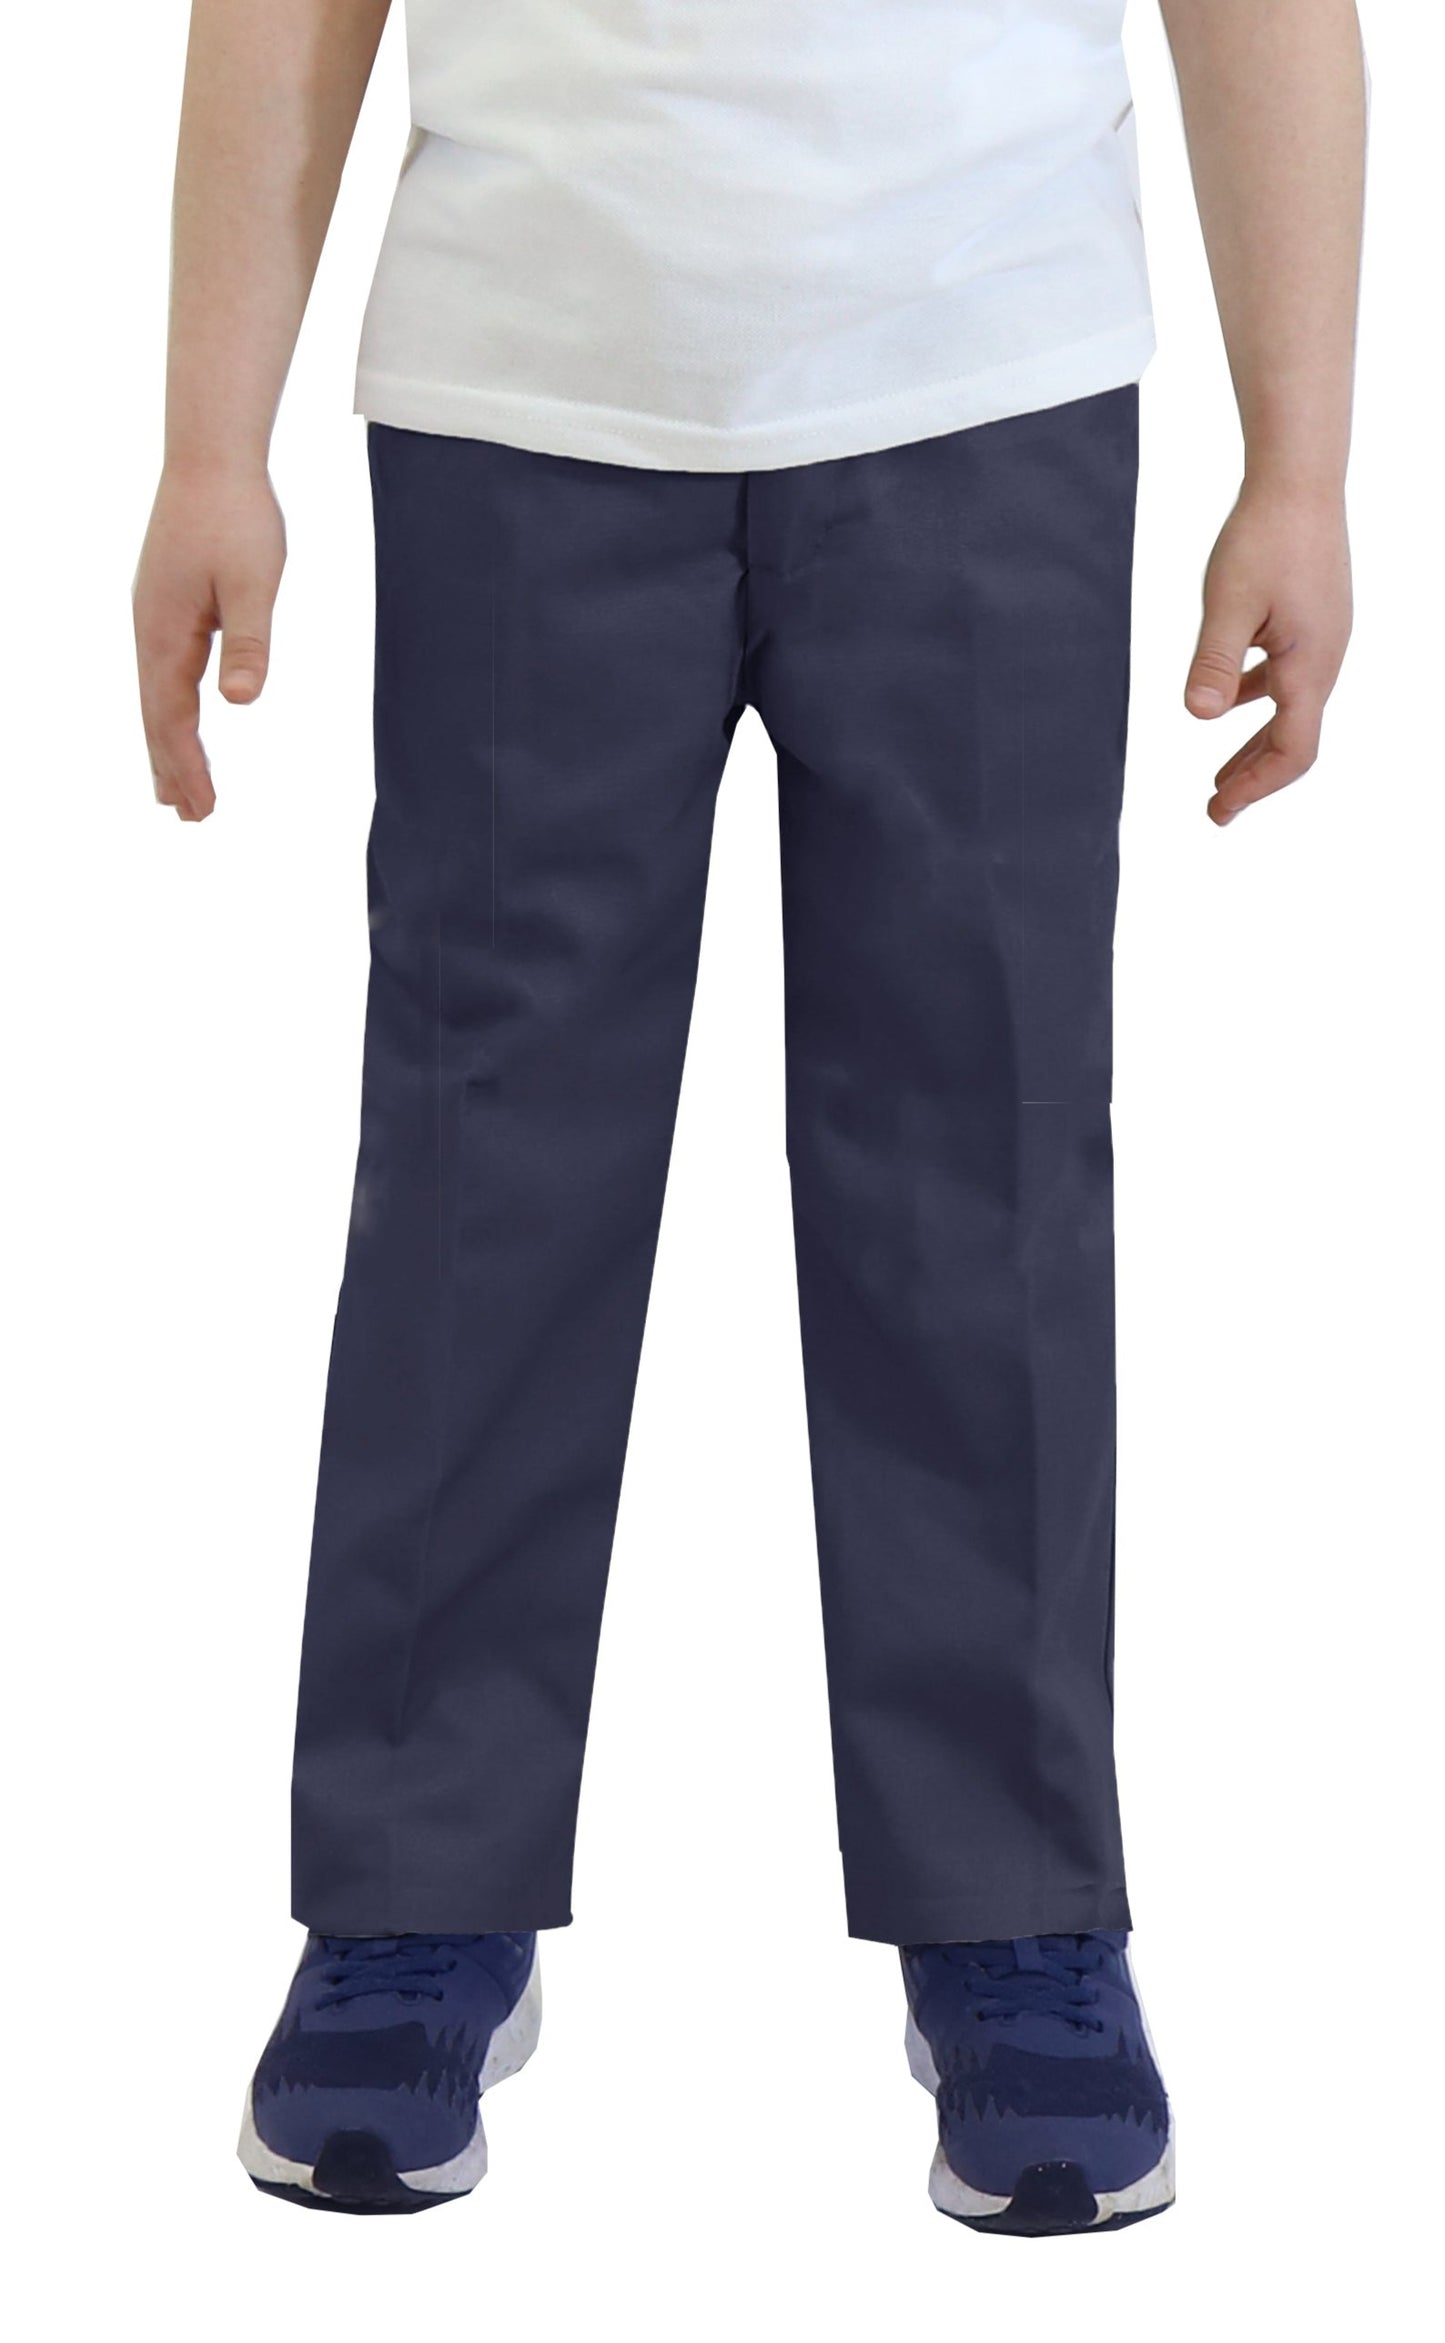 Boys Flat Front School Uniform Pants - Sizes 4-20 - GalaxybyHarvic